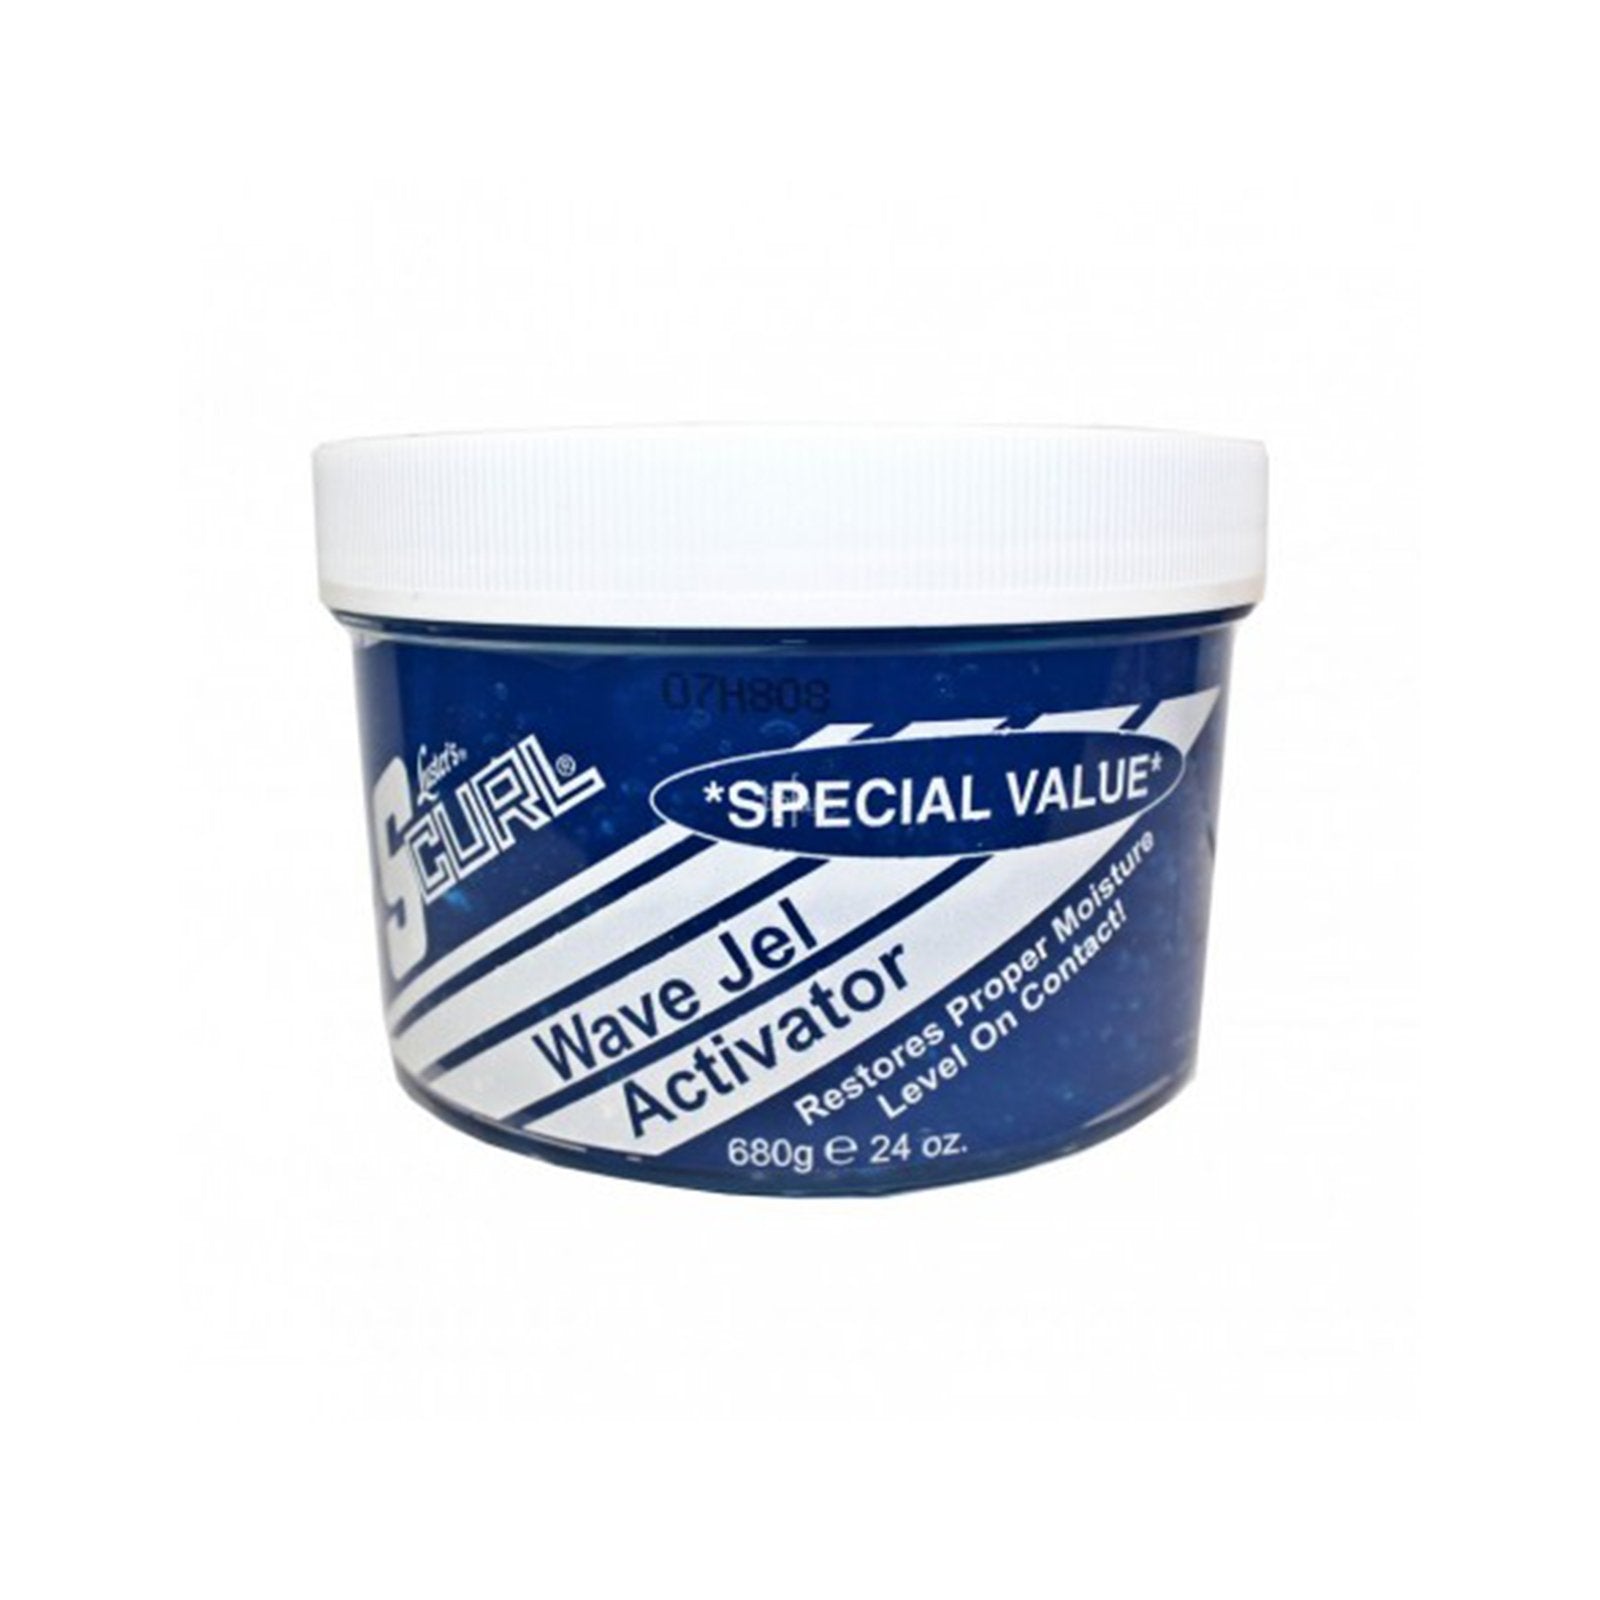 Lusters SCurl Wave Gel Special Value 24 oz